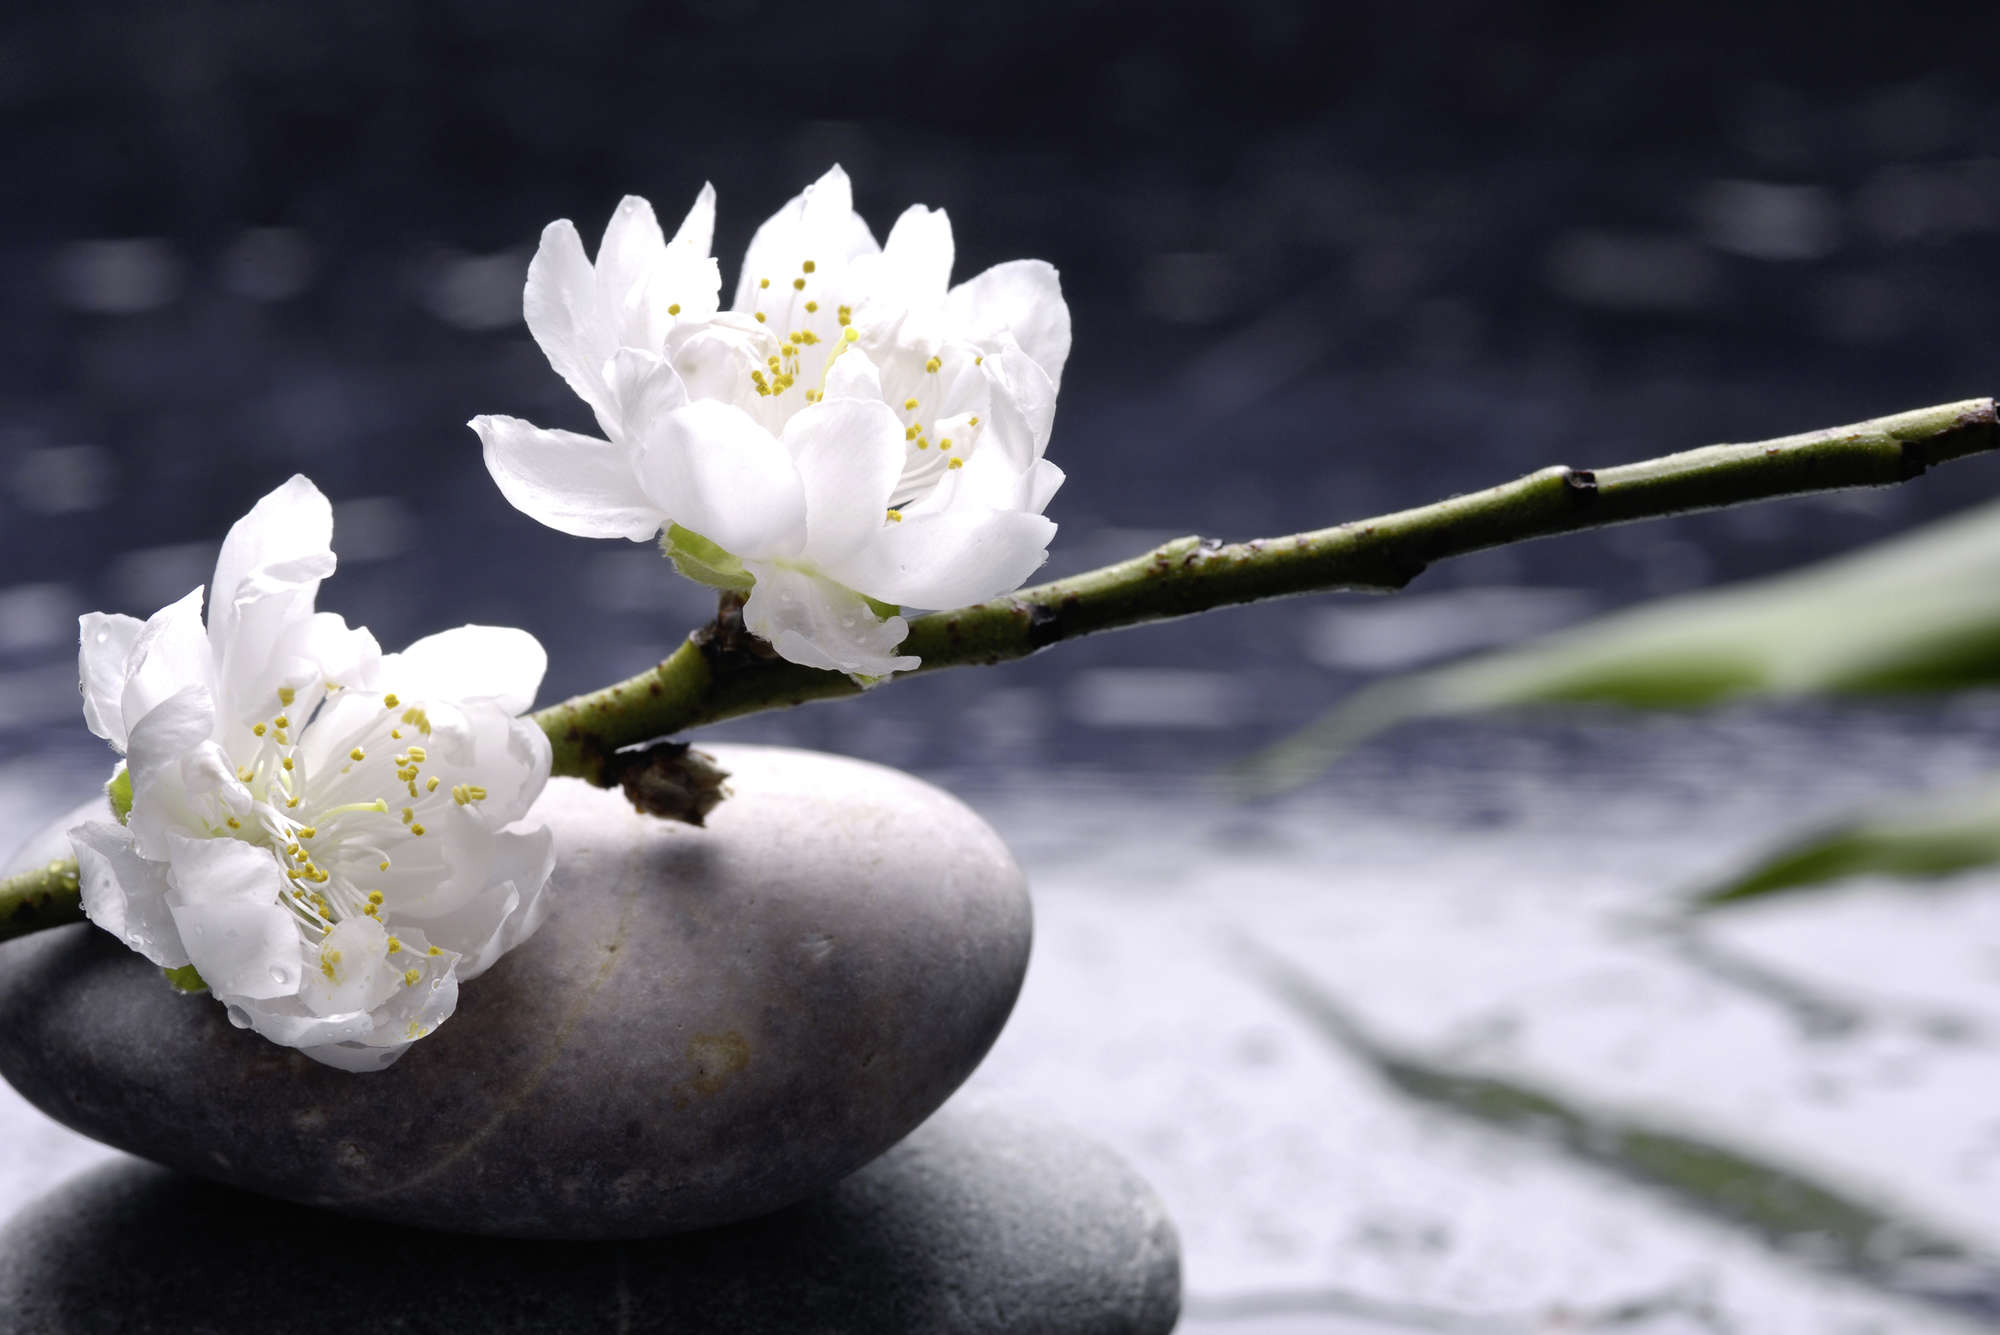             Digital behang Wellness Stones with Blossoms - Mat glad vlies
        